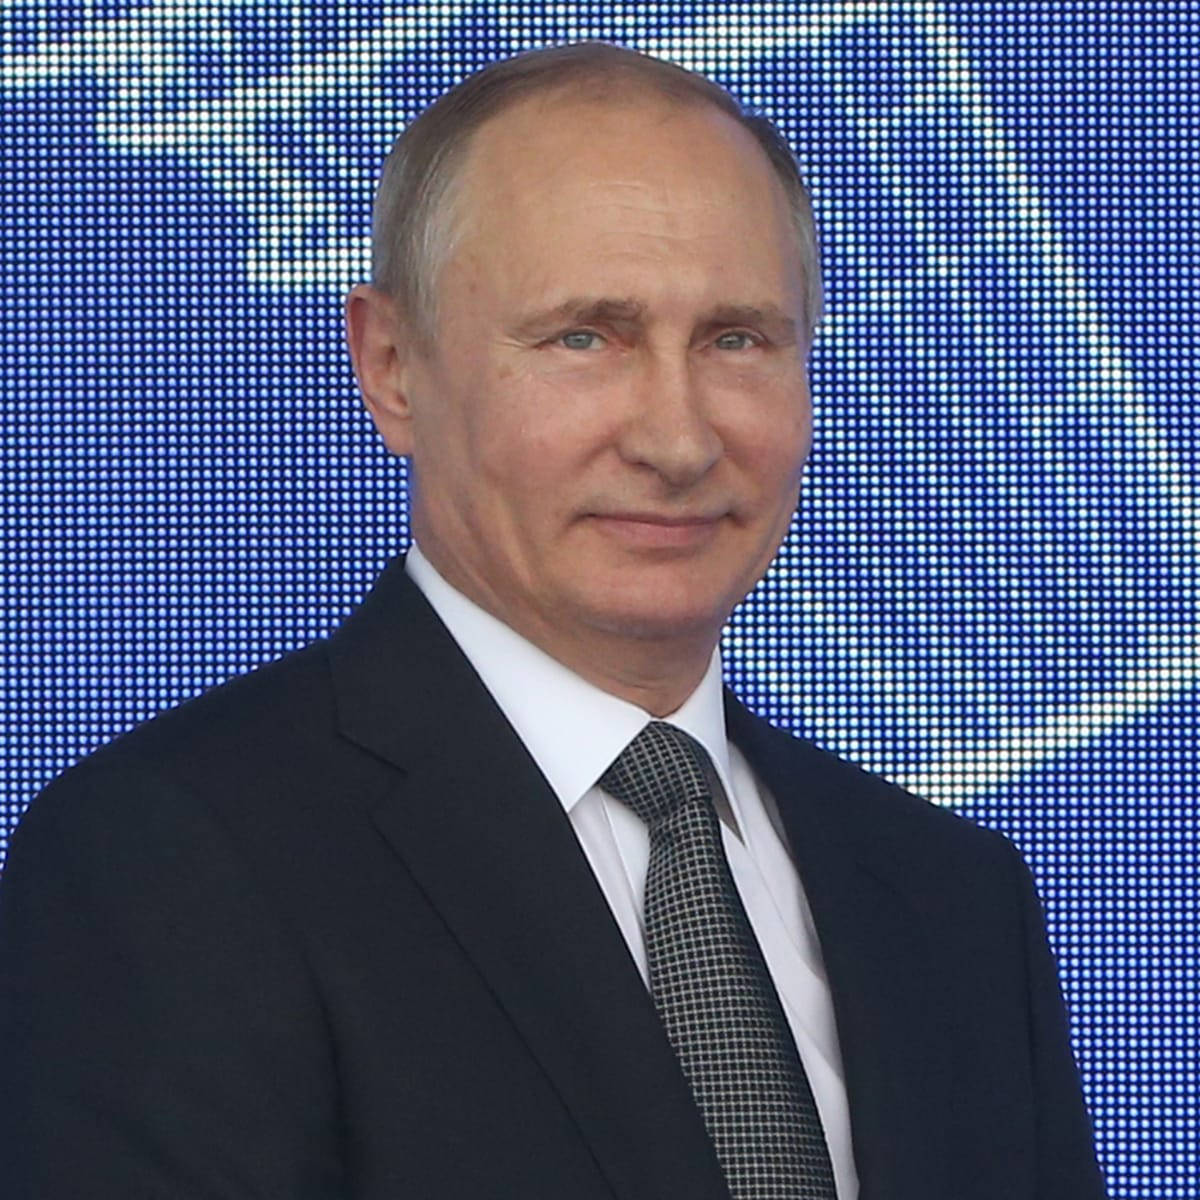 Vladimir Putin Smiling Against A Blue Screen Wallpaper